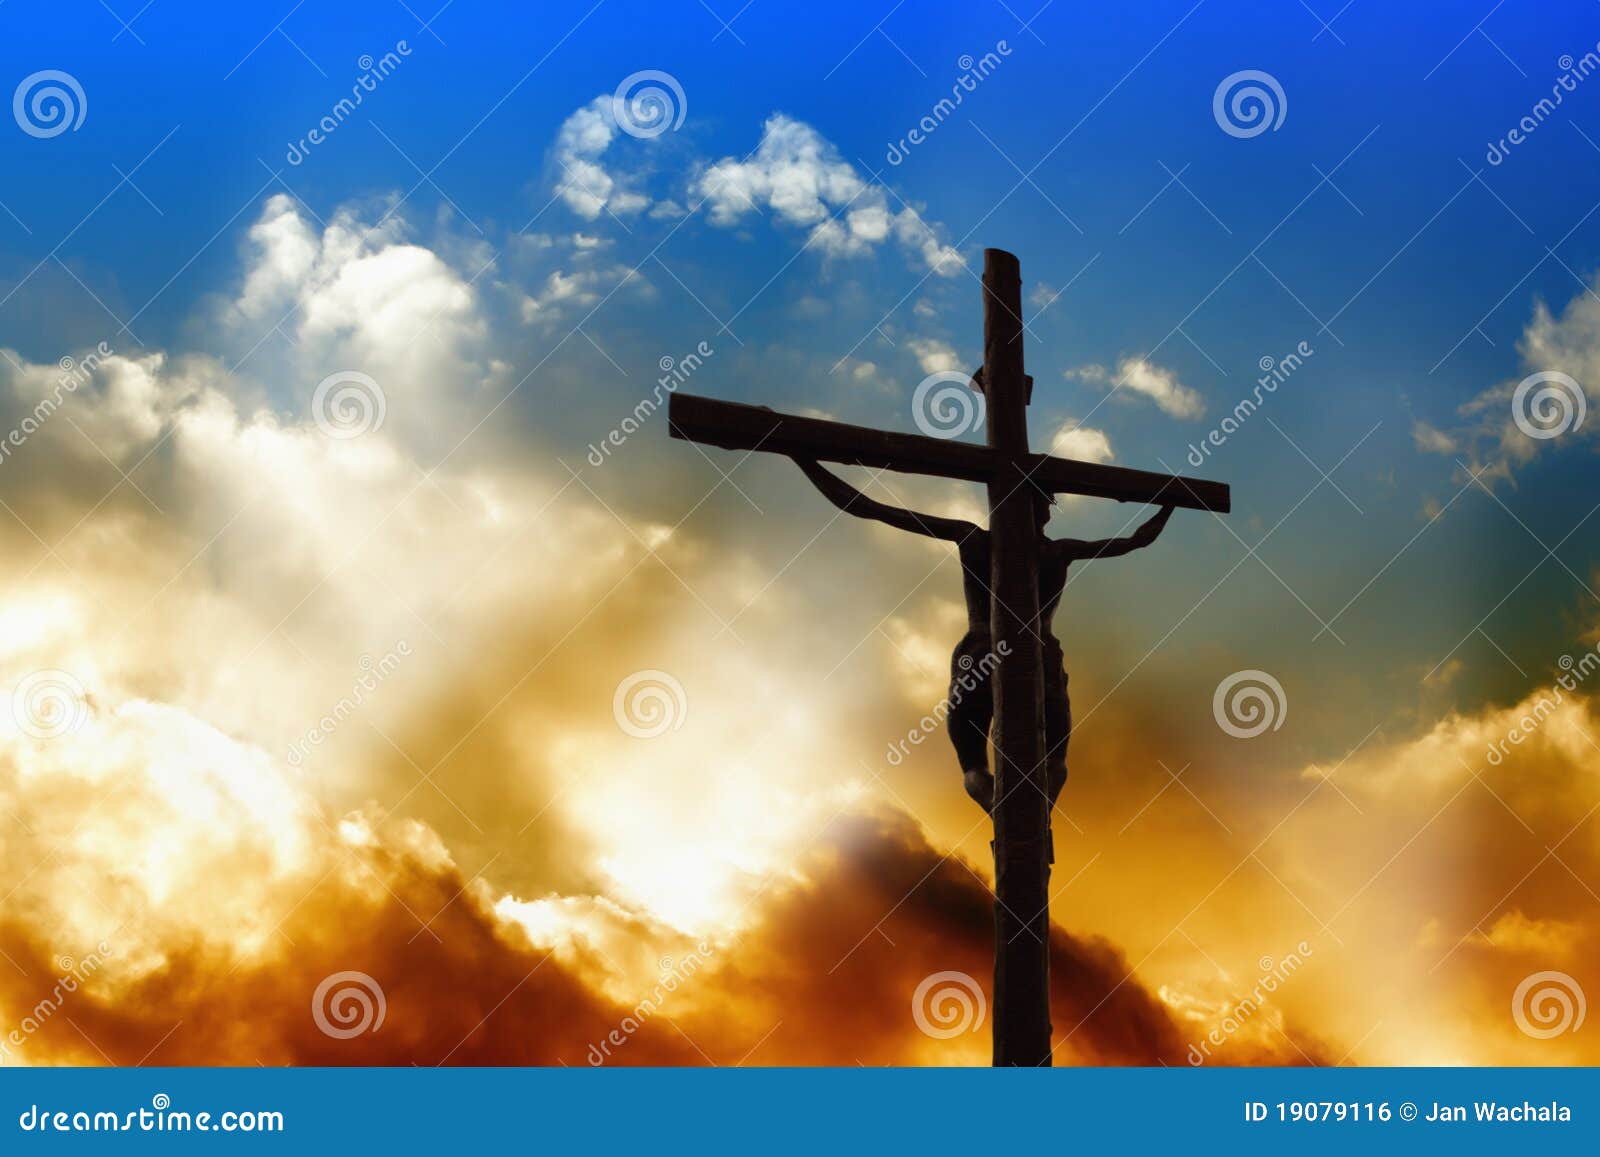 savior on the cross